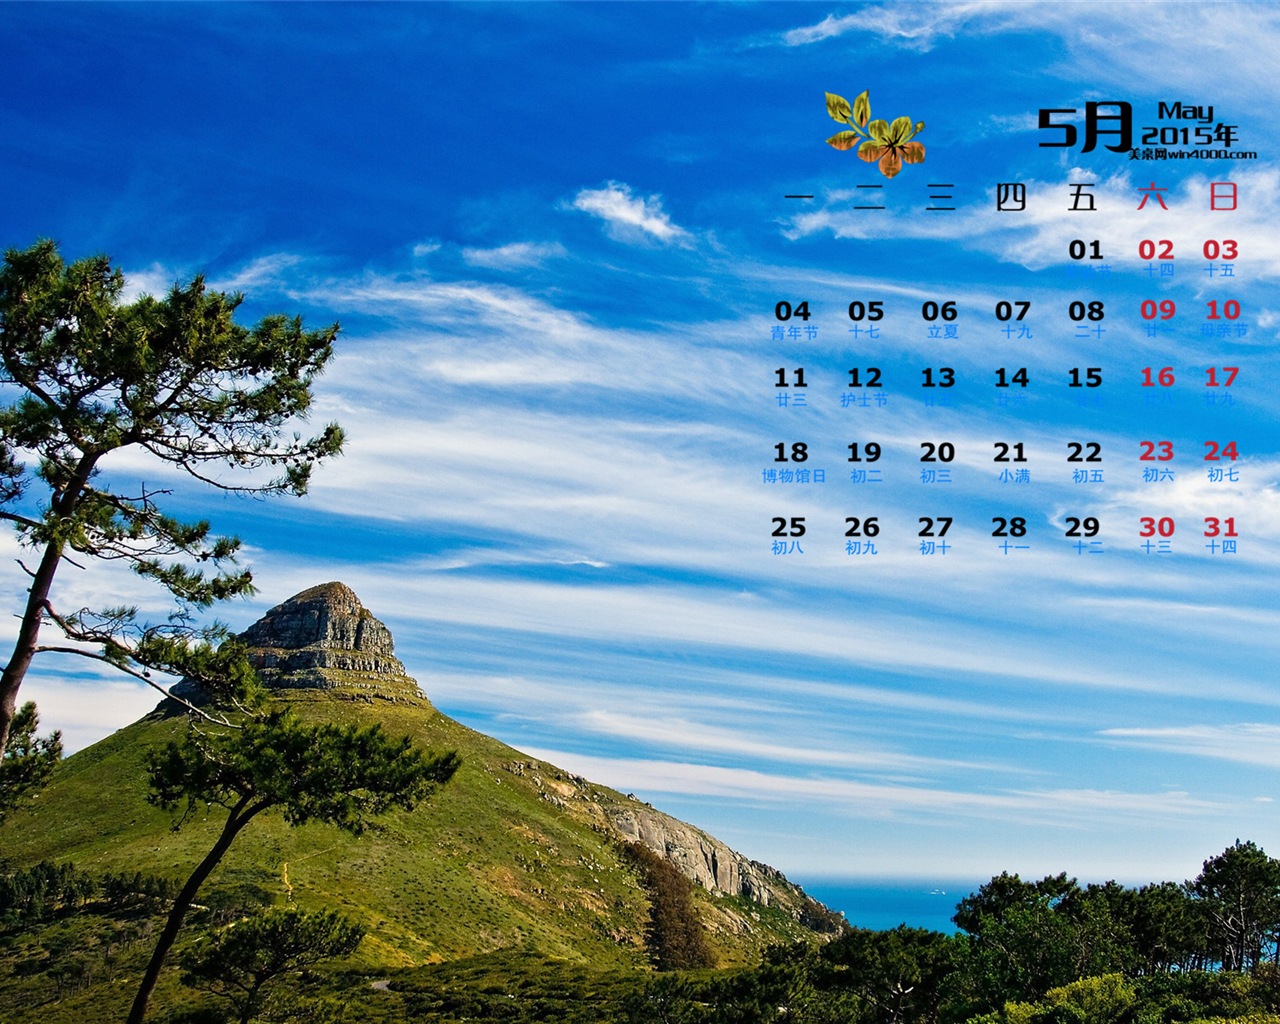 Mai 2015 calendar fond d'écran (1) #20 - 1280x1024